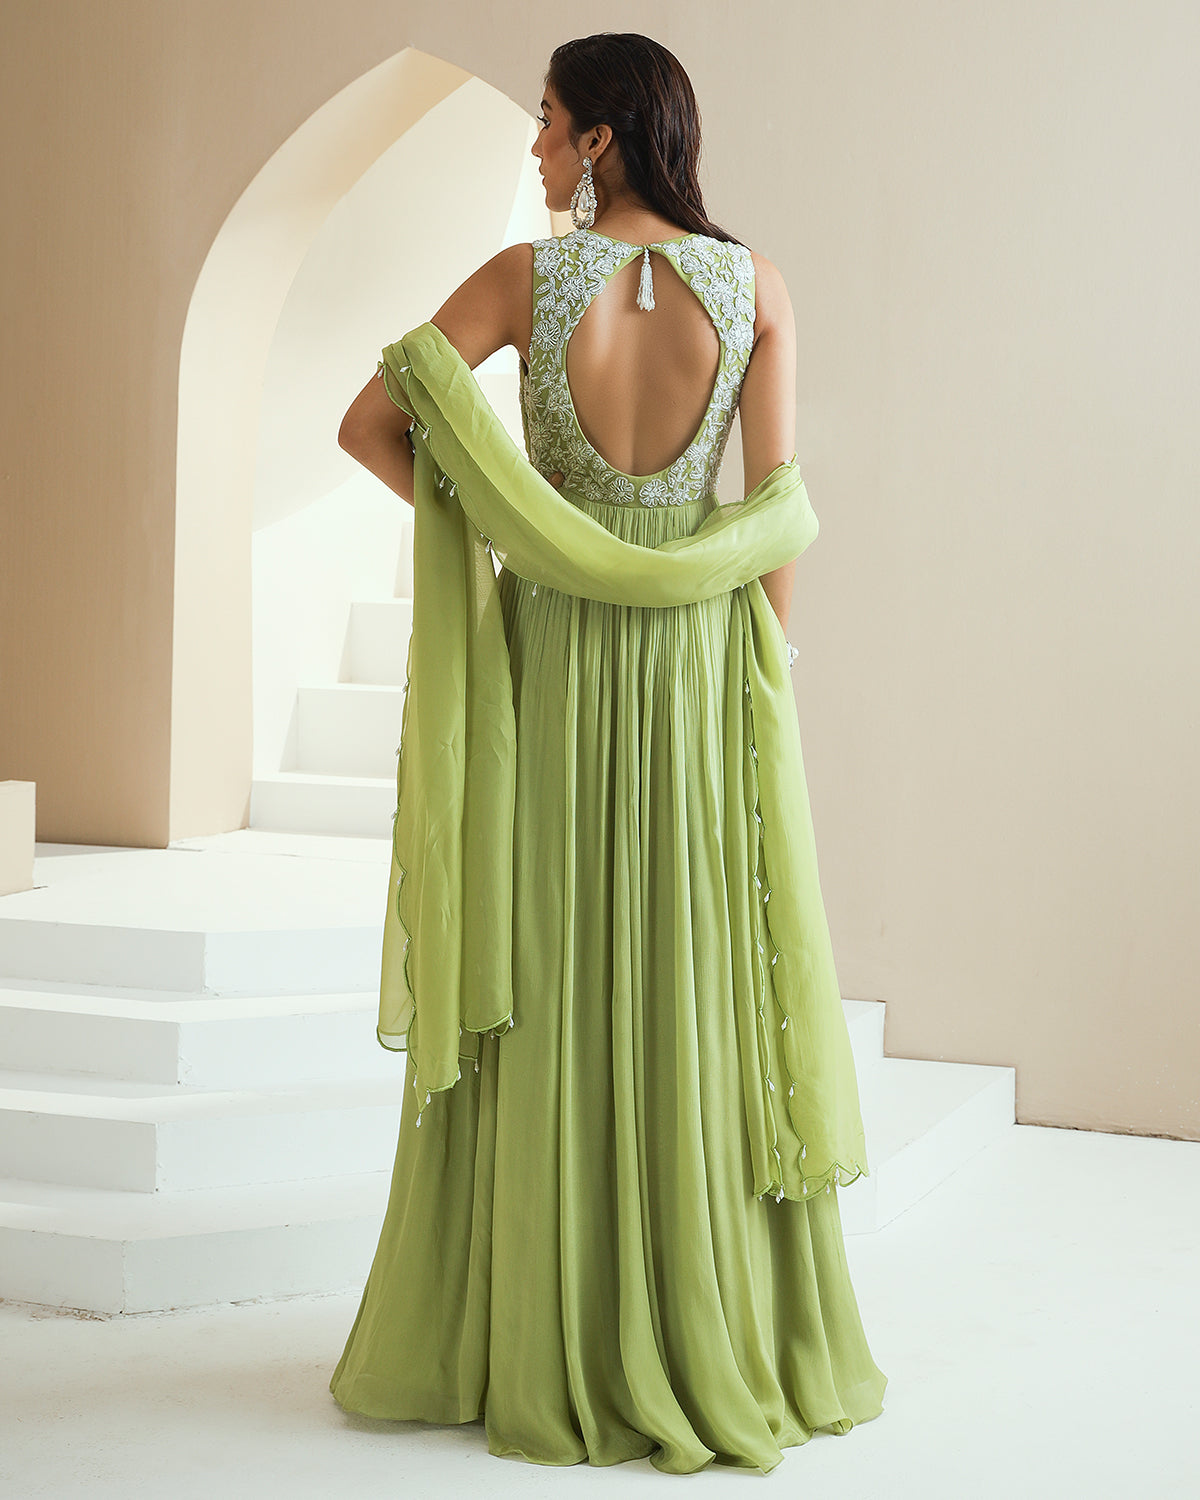 Glamorous Green Colour Ethnic Anarkali Dress For Charming Wedding Looks -  KSM PRINTS - 4193703